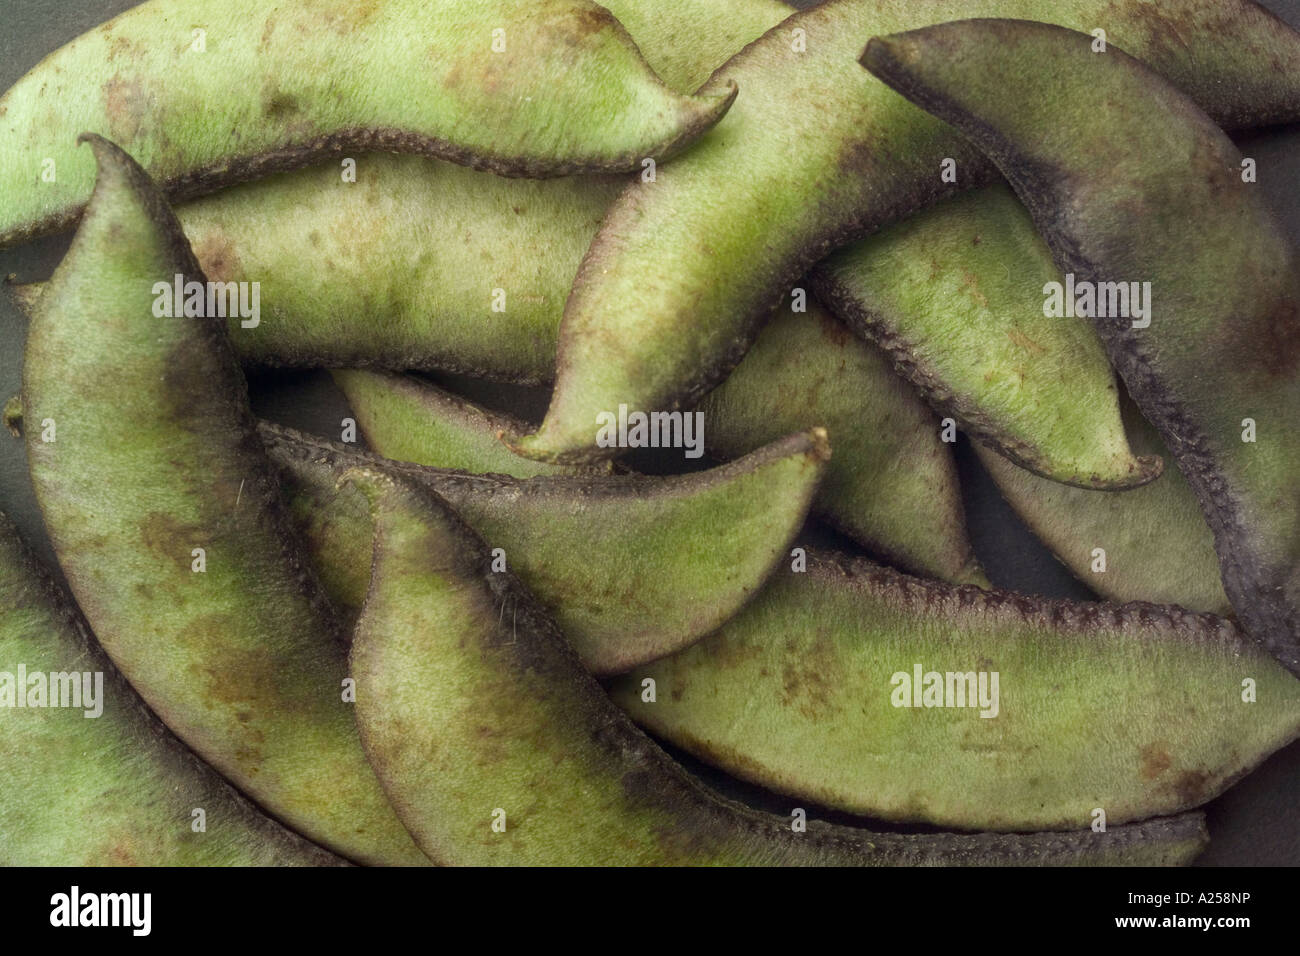 beans called seem in bangladeshi Stock Photo